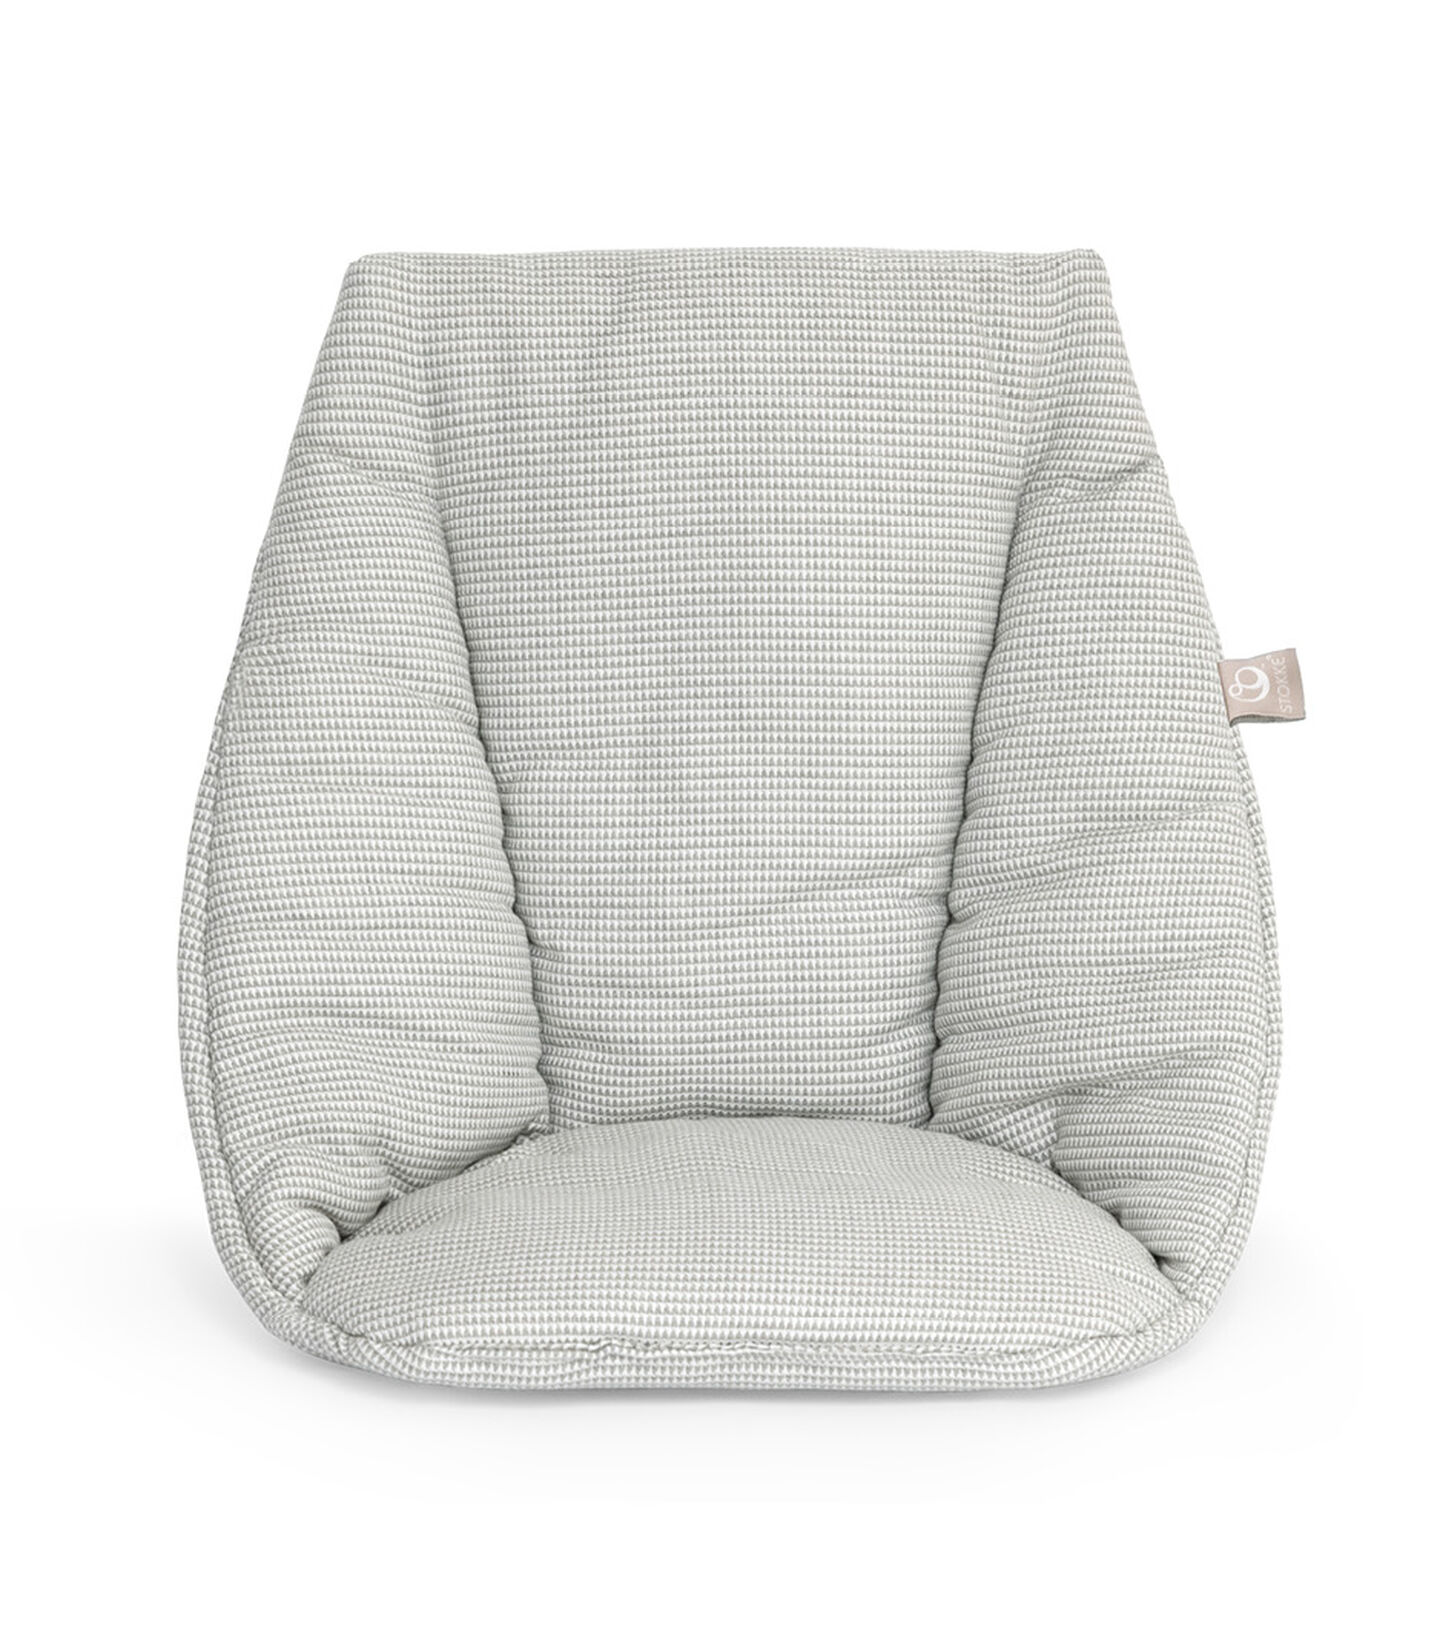 Tripp Trapp® Baby Cushion Nordic Grey, Nordic Grey, mainview view 1